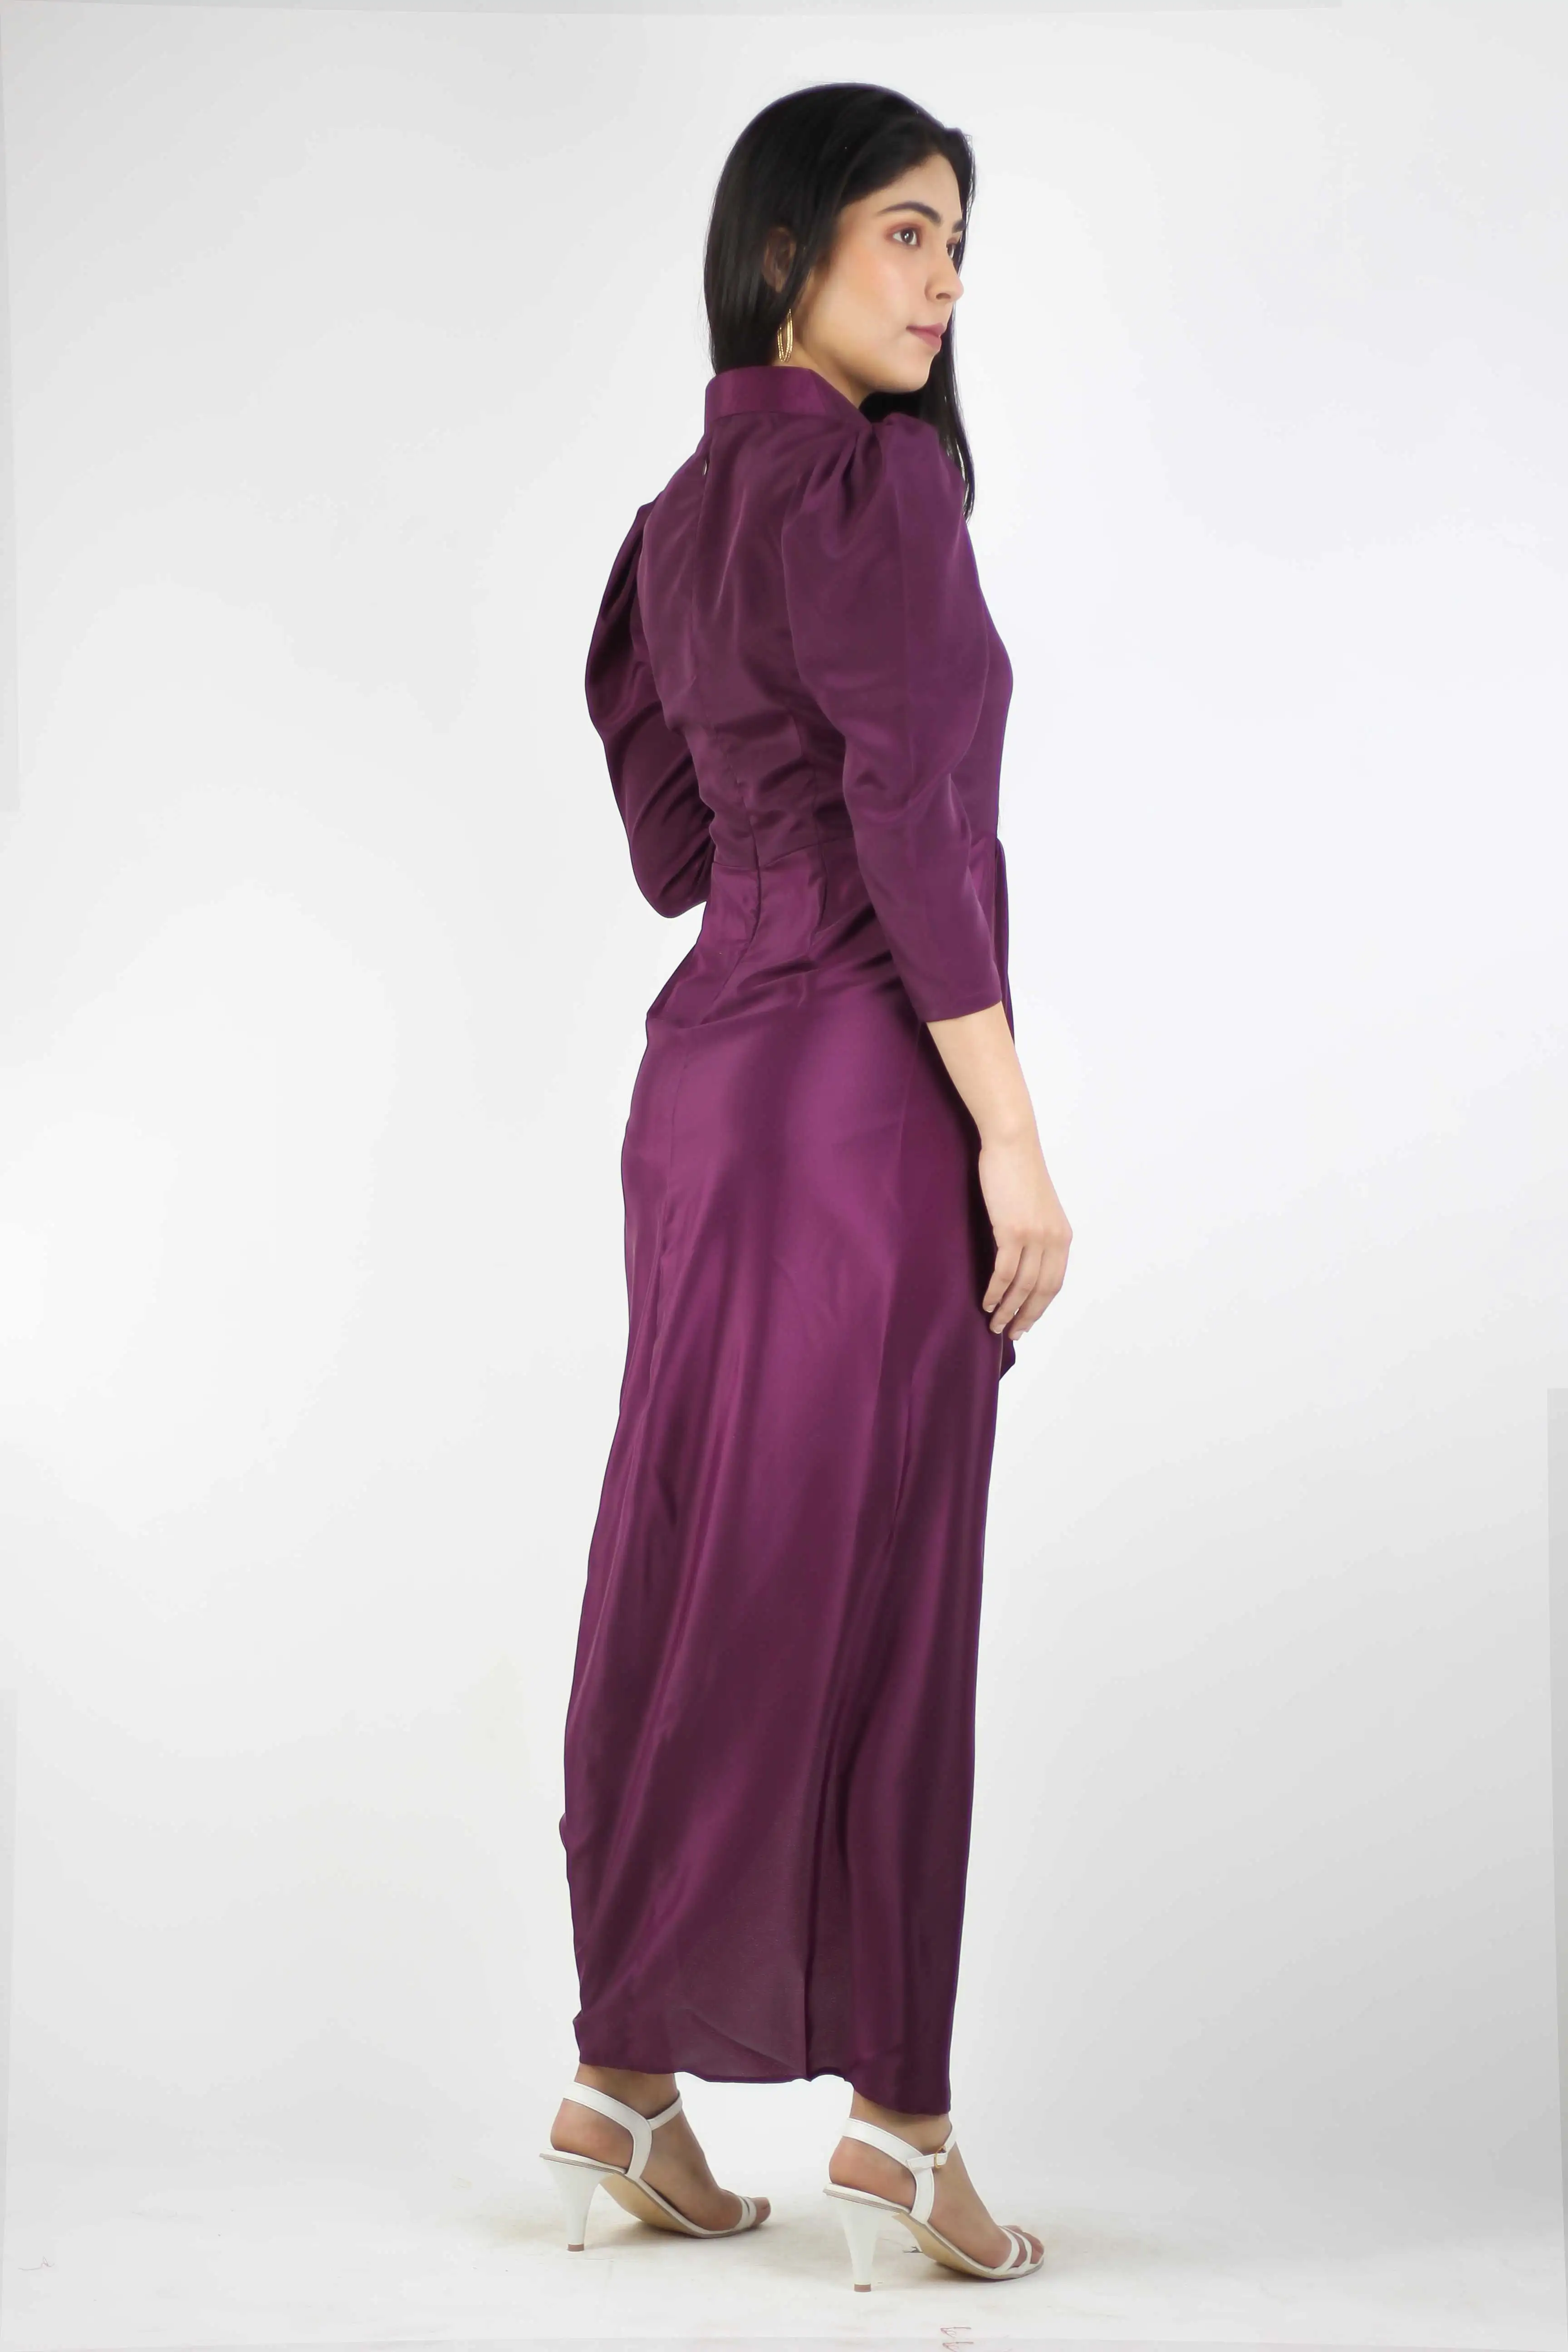 Purple Dress With Collar